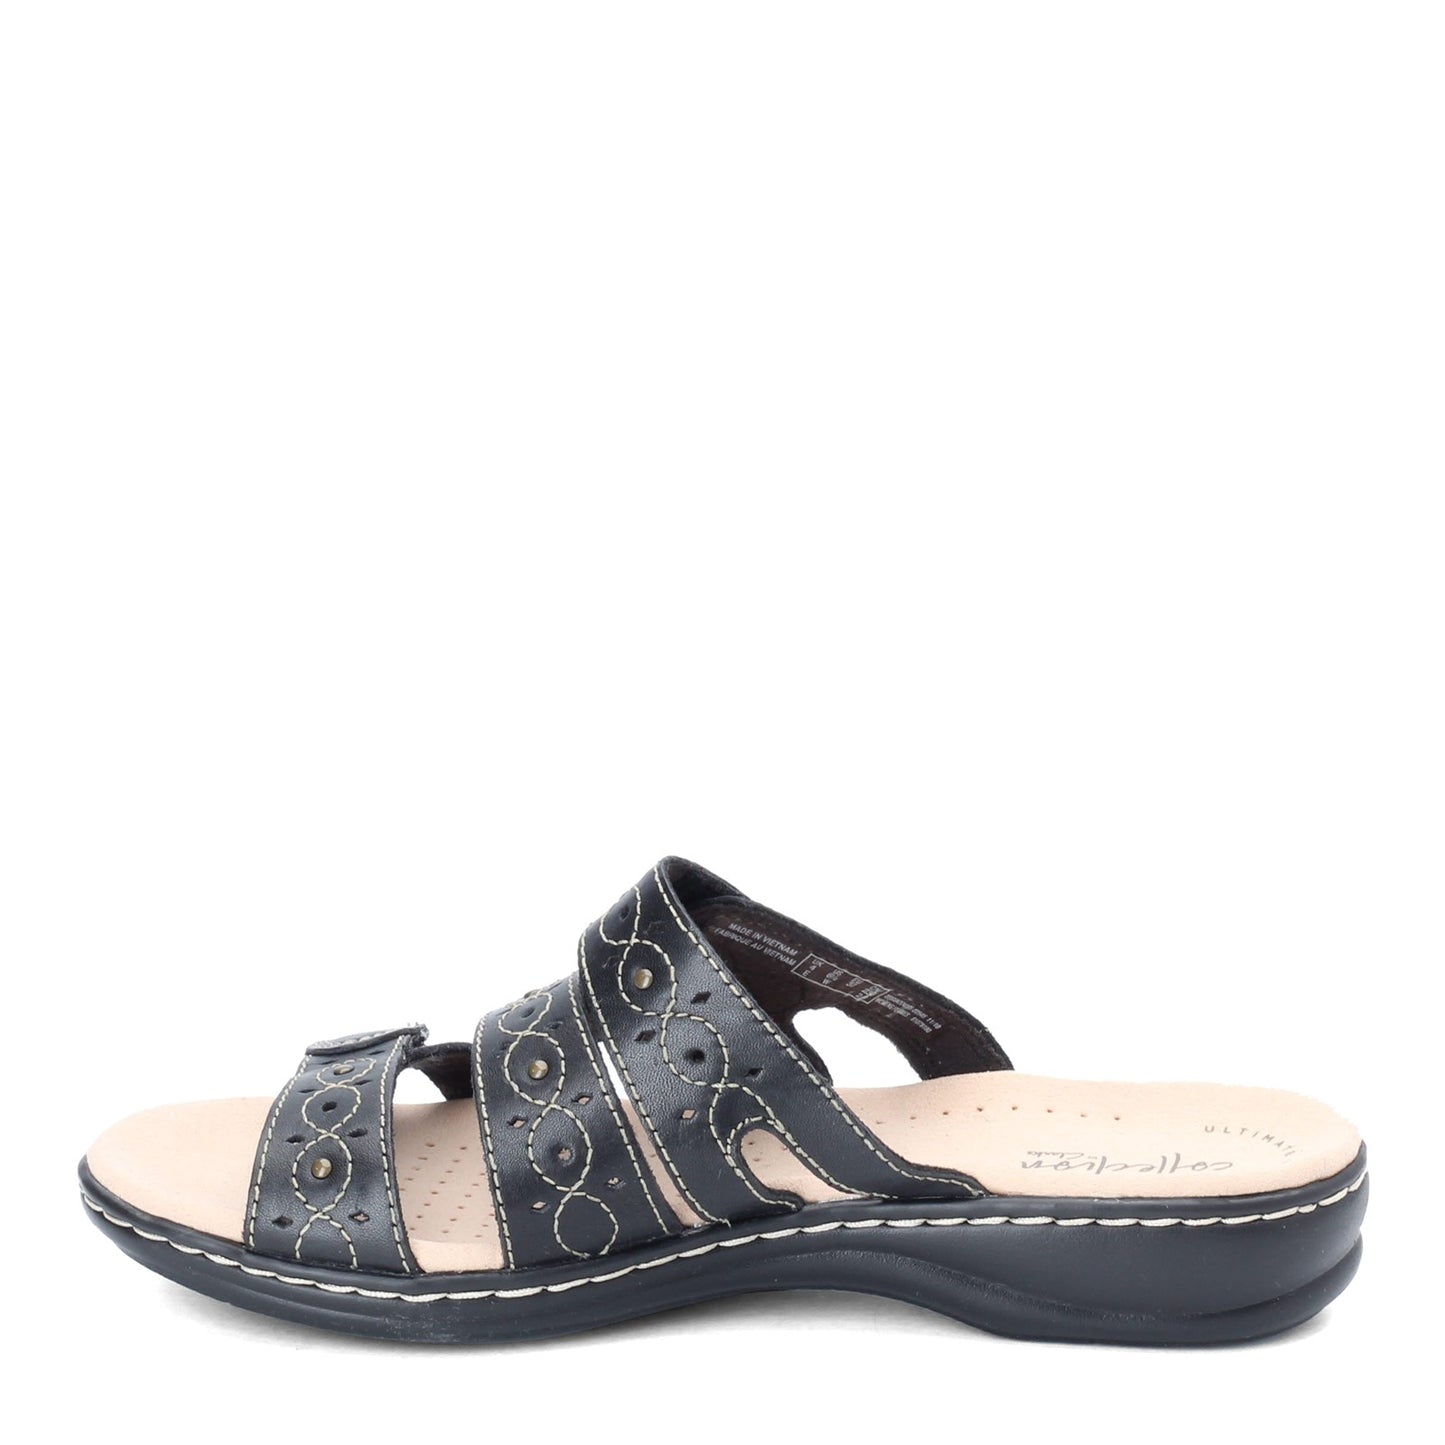 Peltz Shoes  Women's Clarks Leisa Cacti Sandal BLACK 26100437